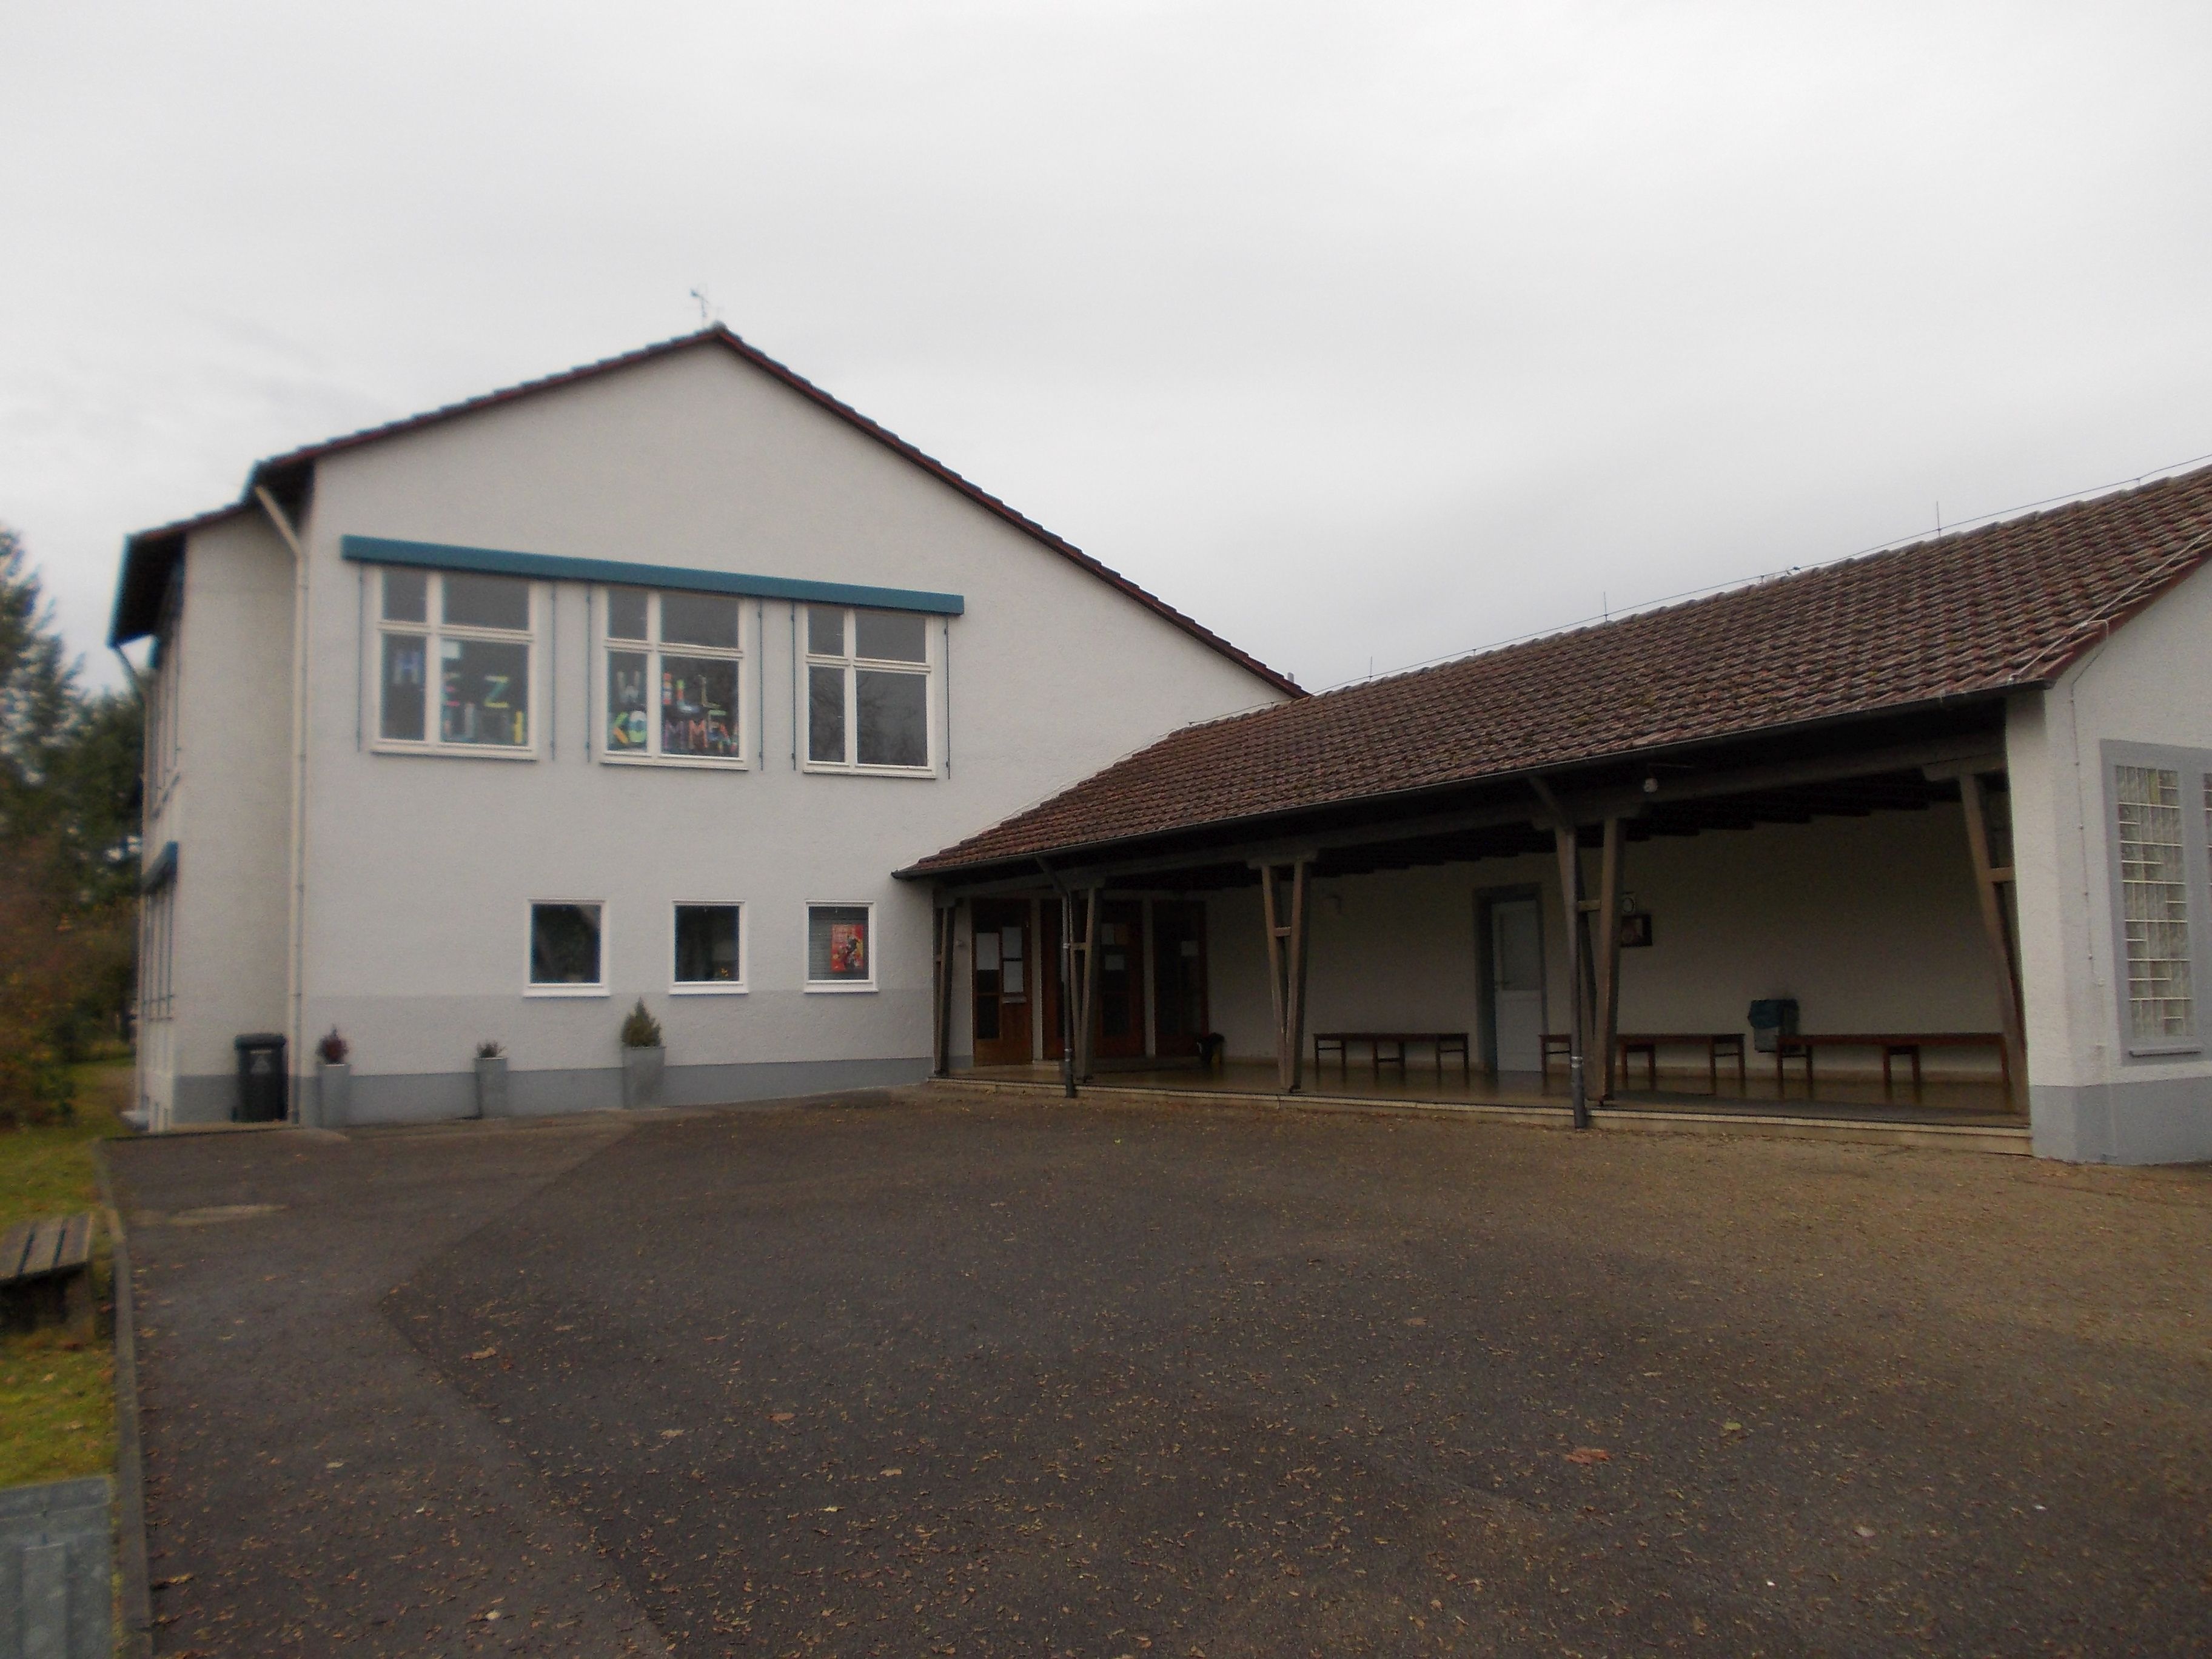 Grundschule Burgberg